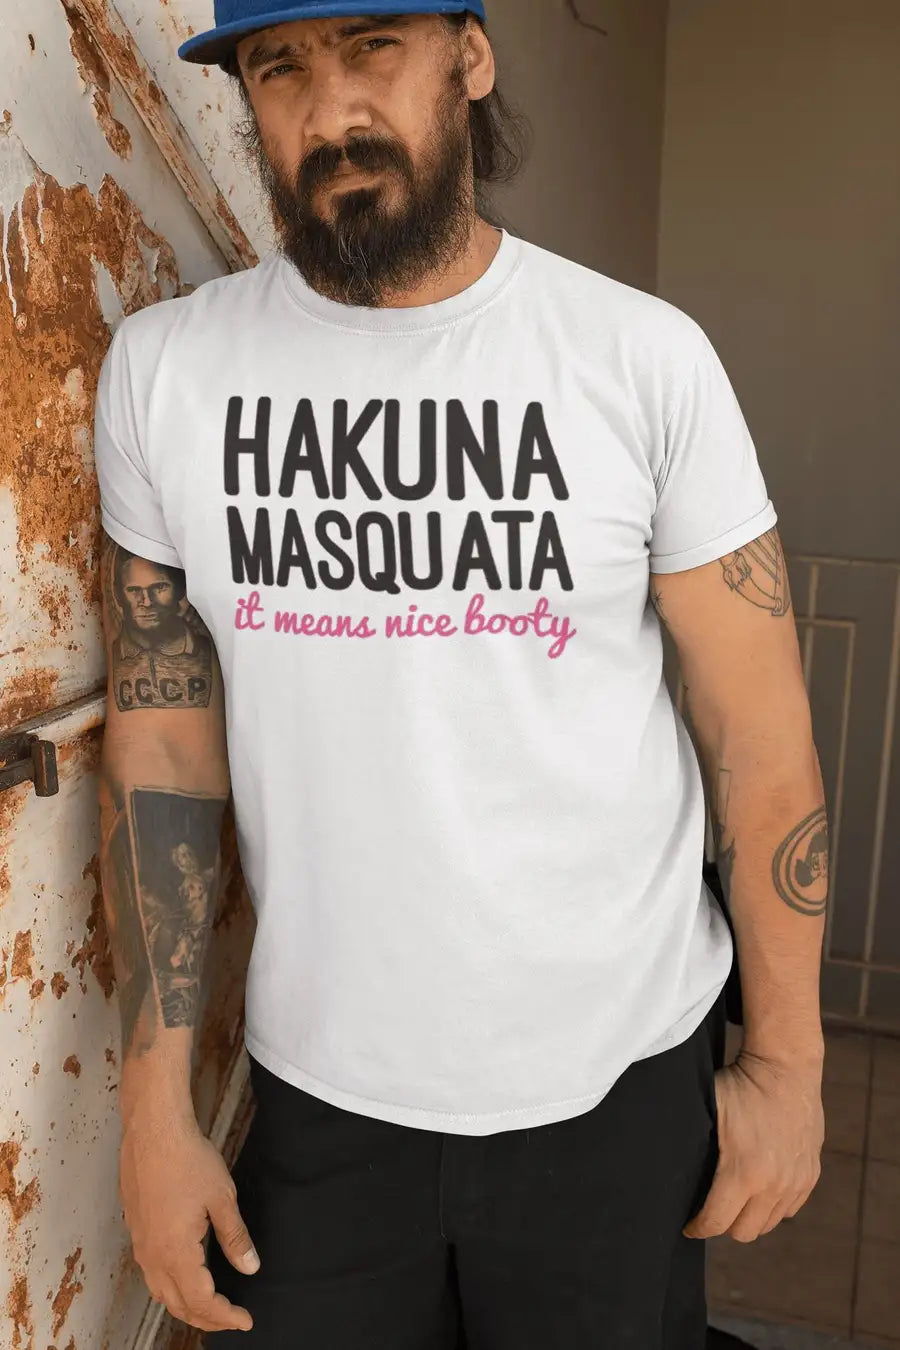 Hakuna Masquata T Shirt for Men and Women | Premium Design | Catch My Drift India - Catch My Drift India Clothing clothing, general, gym, made in india, shirt, t shirt, trending, tshirt